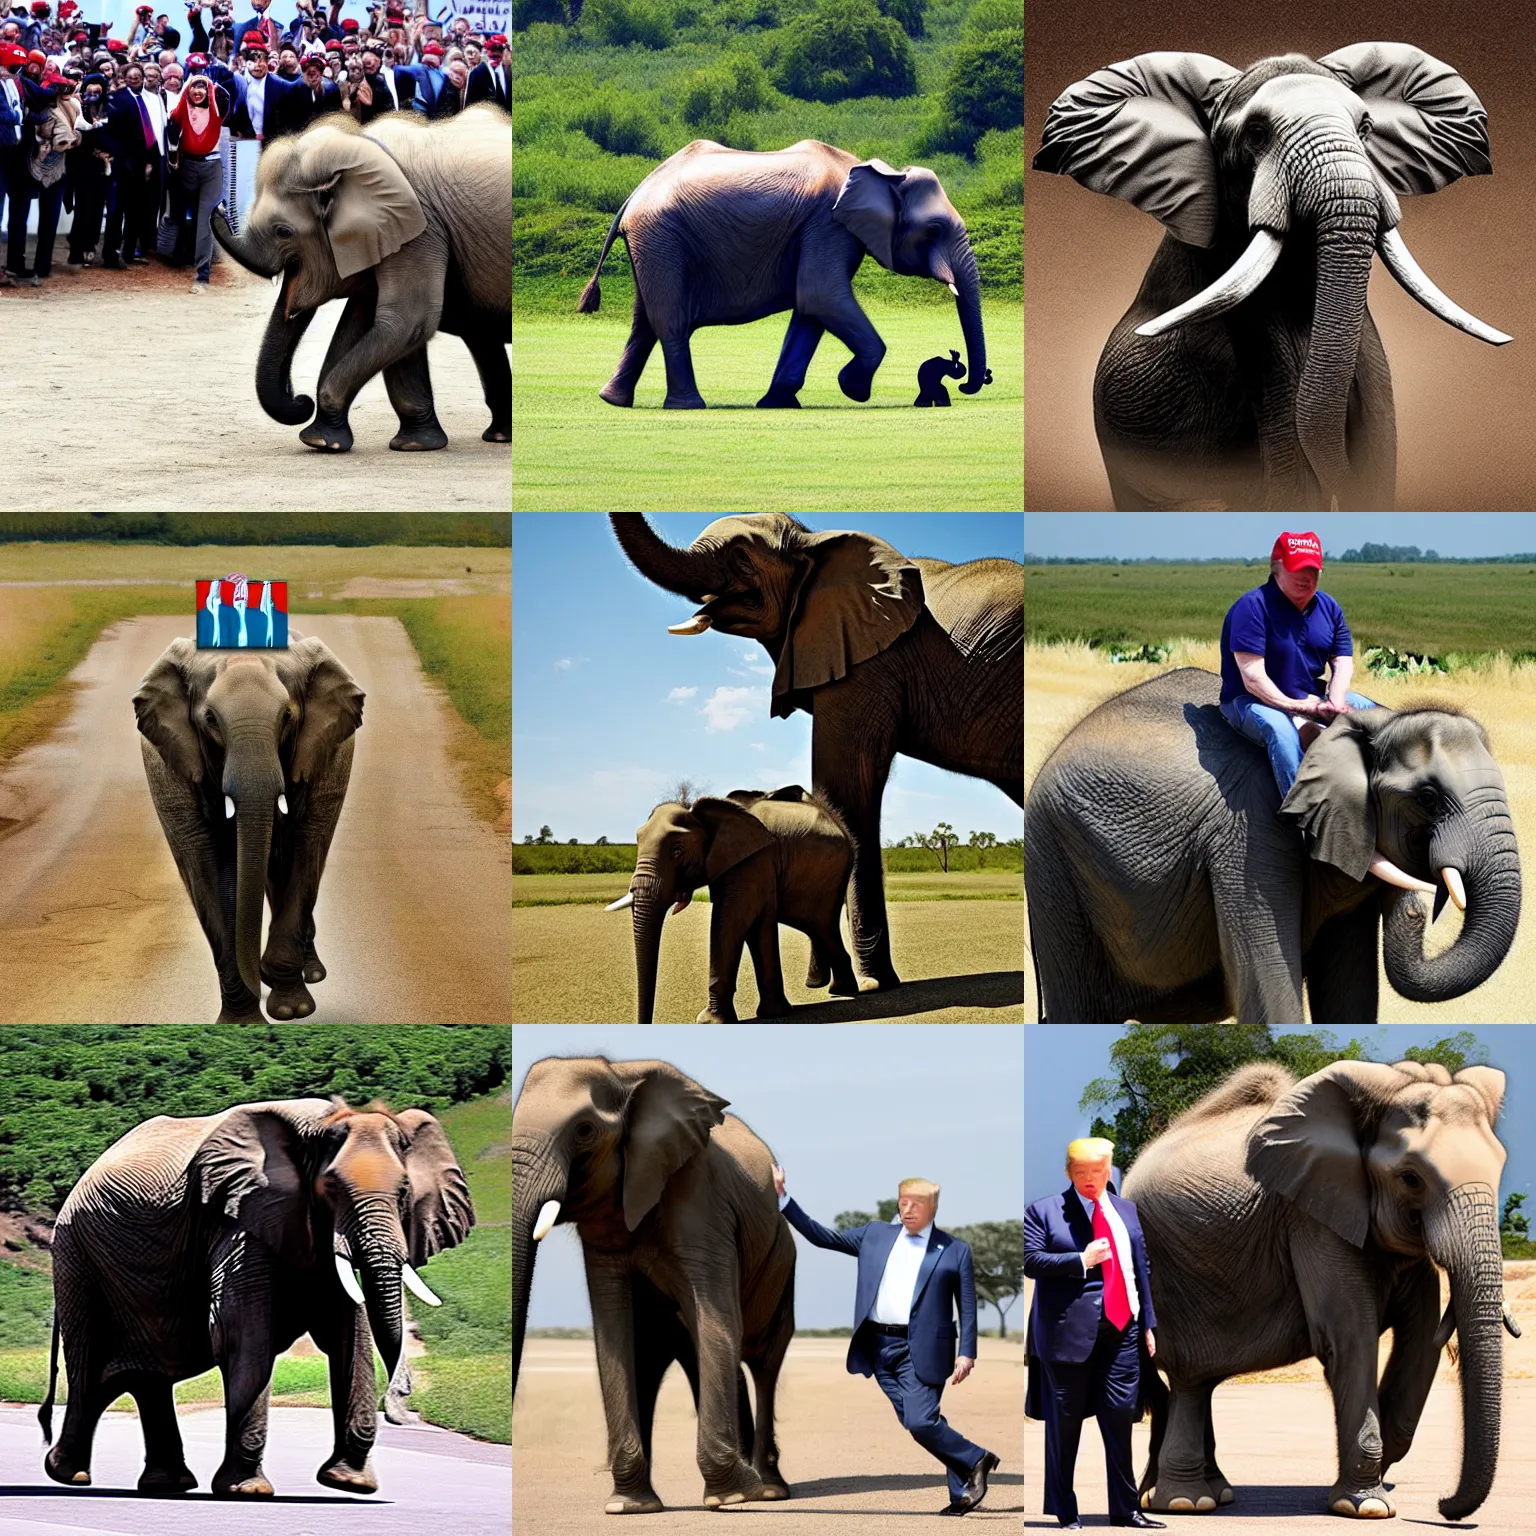 Prompt: Donald Trump riding an elephant